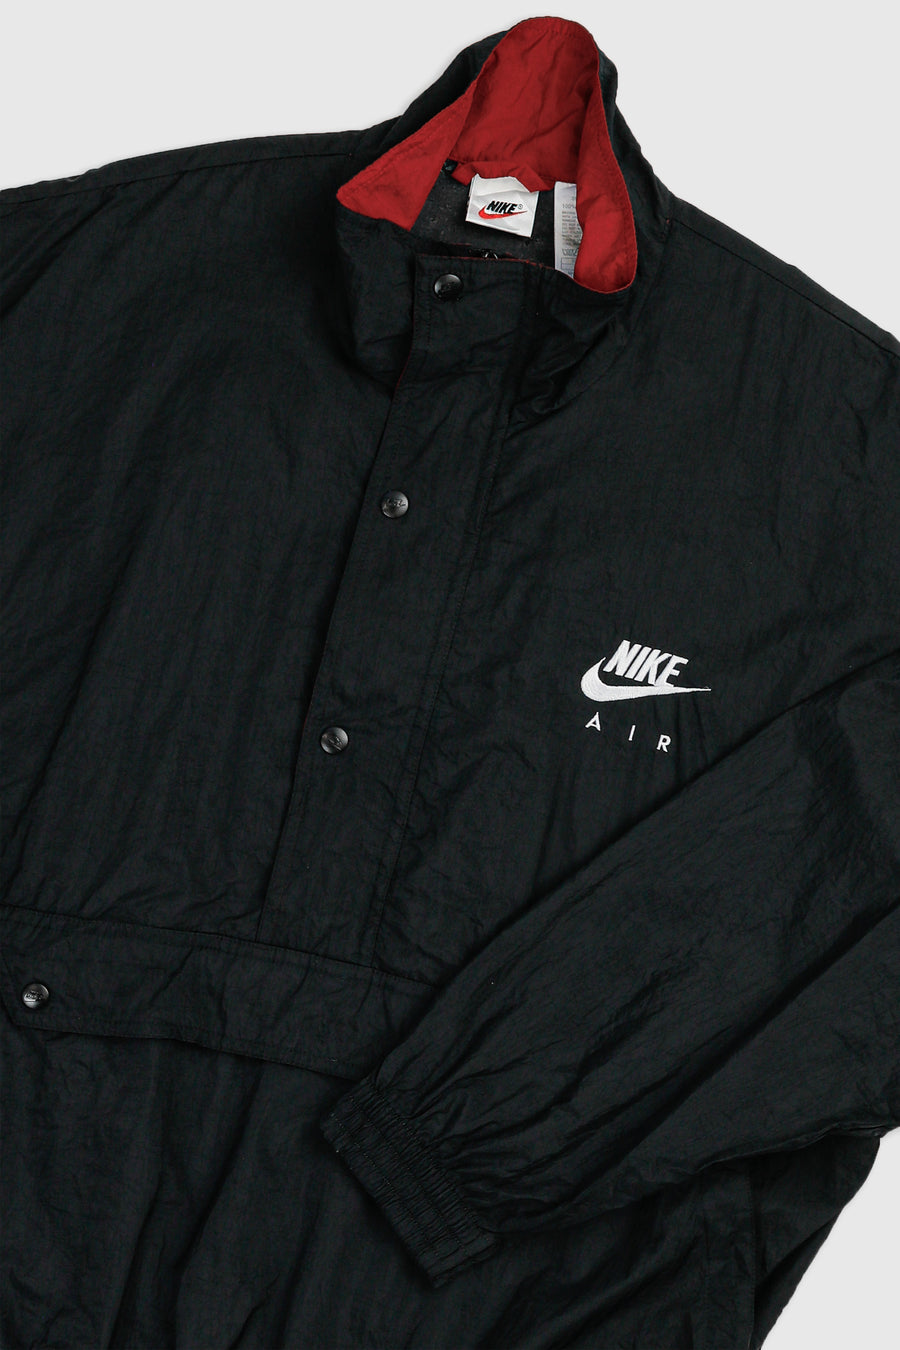 Vintage Nike Windbreaker Jacket - M